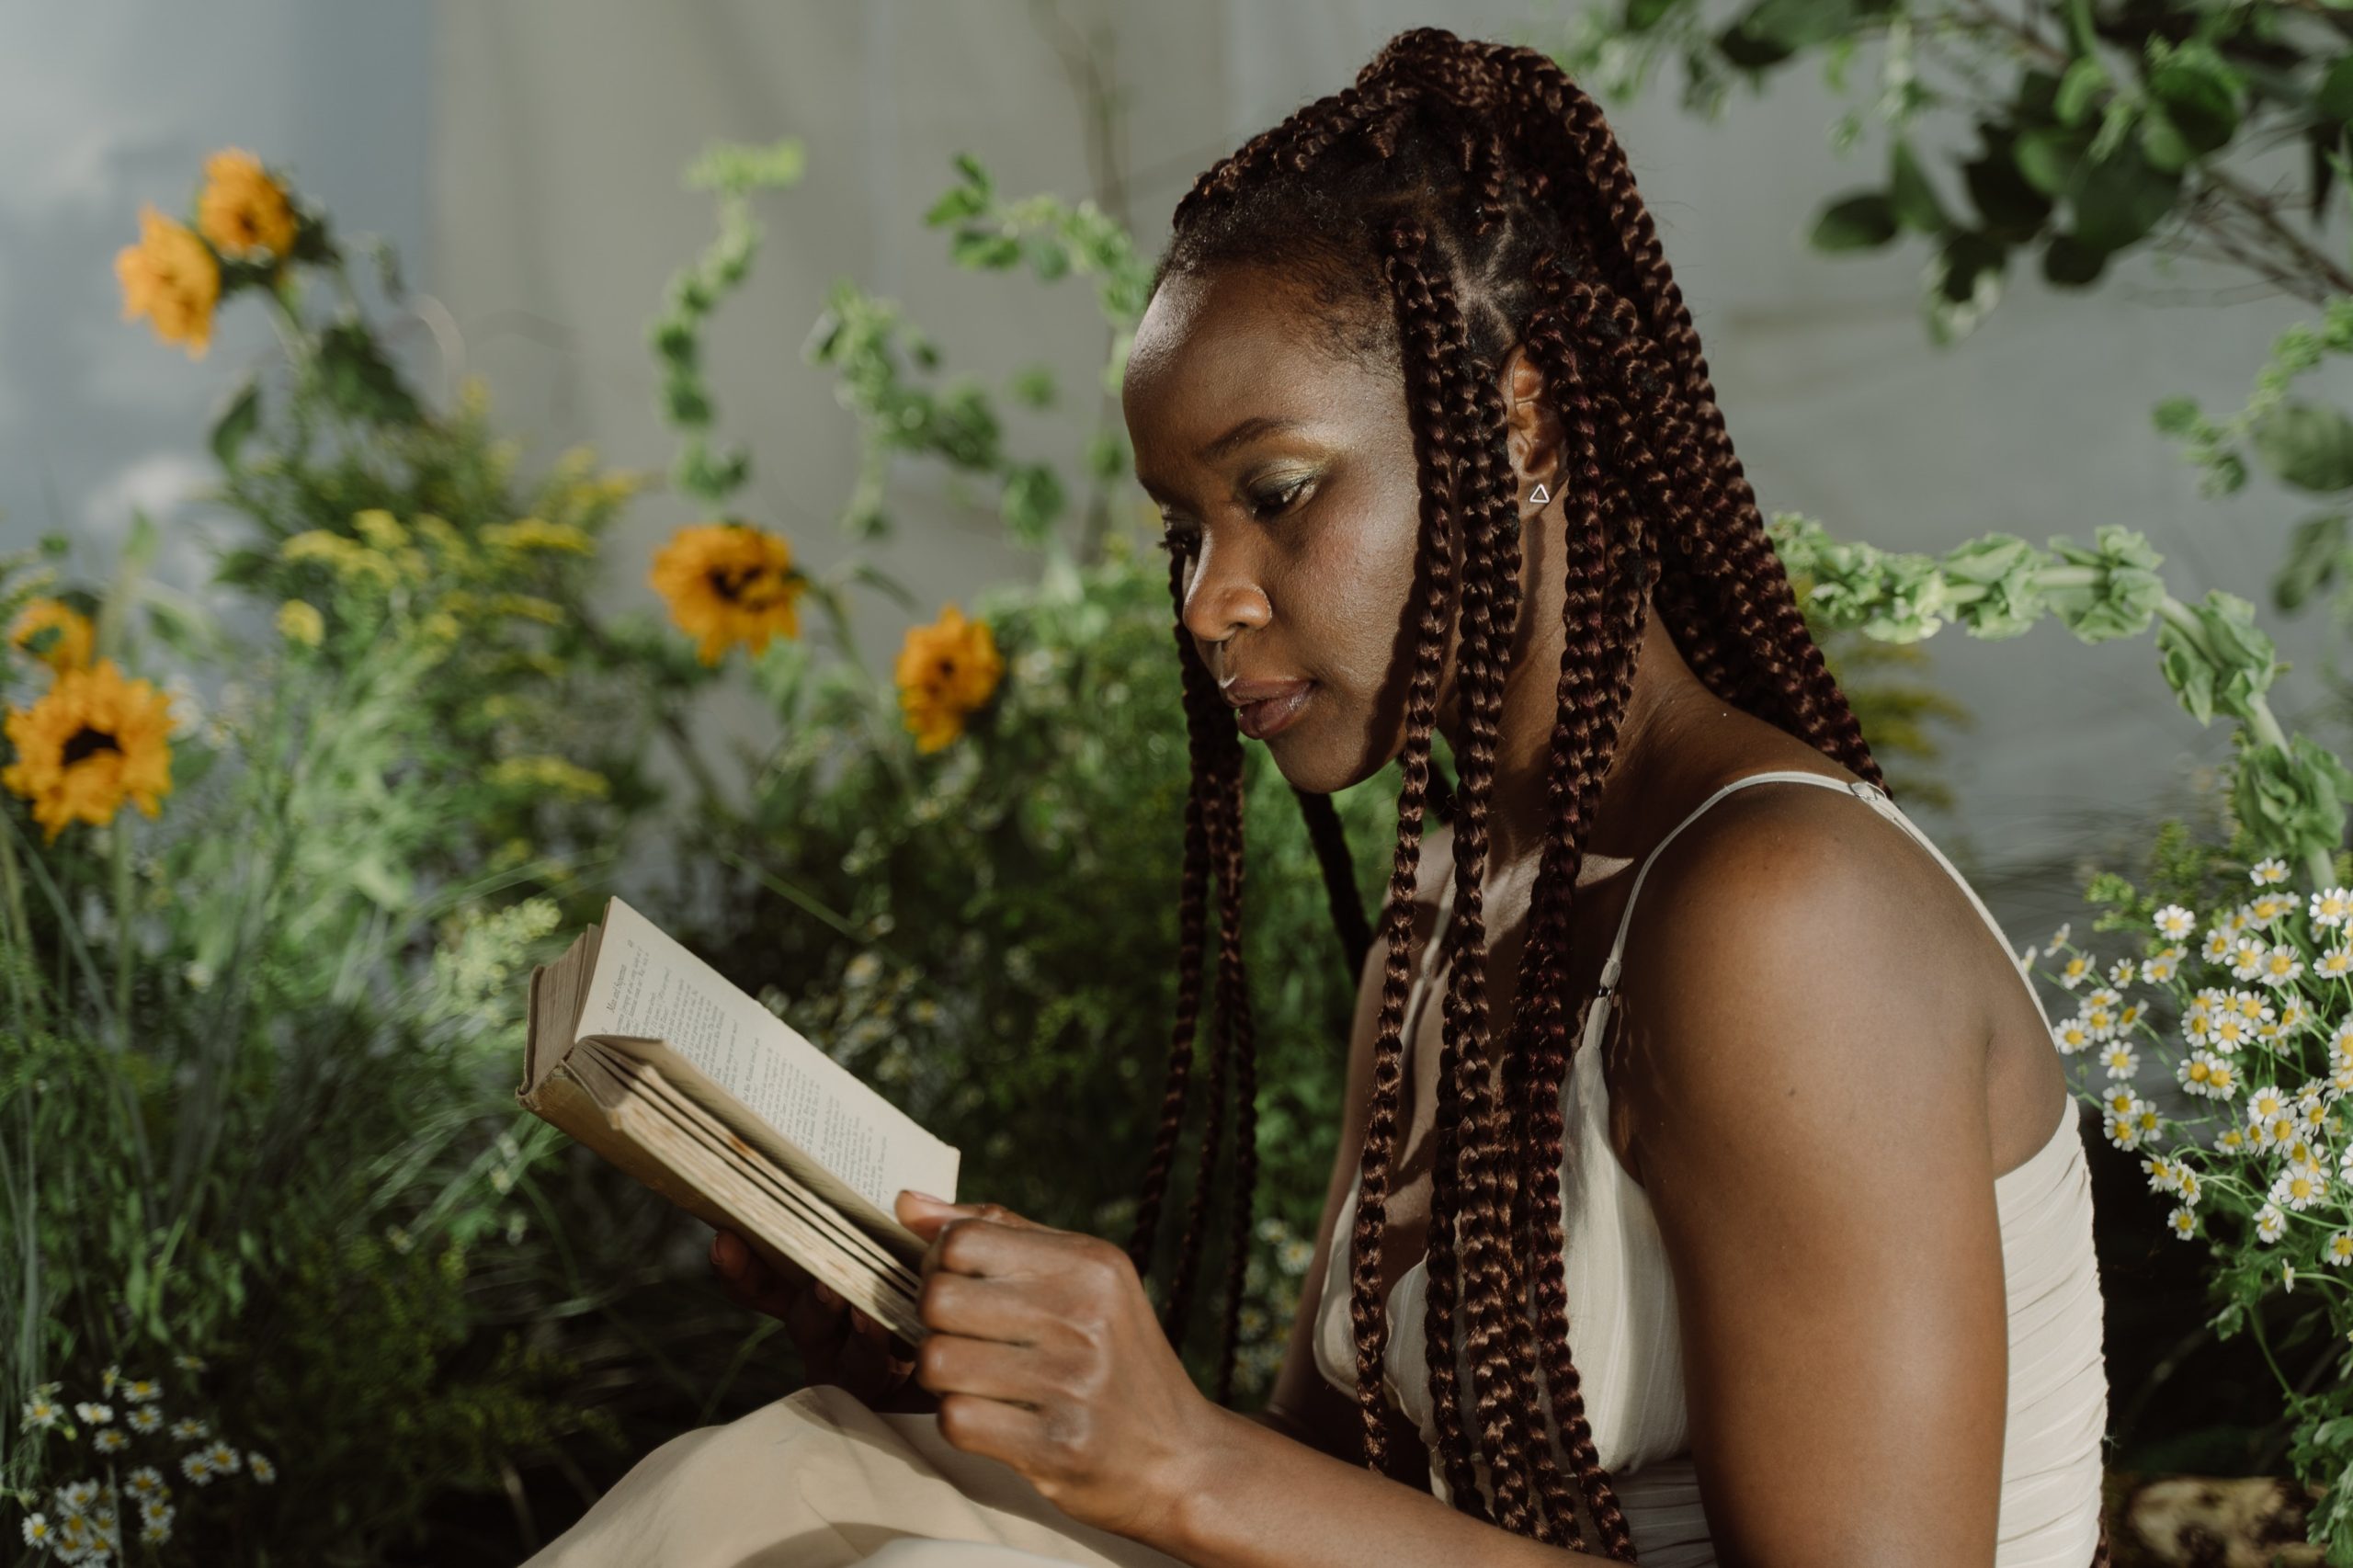 memoirs by Black women for healing